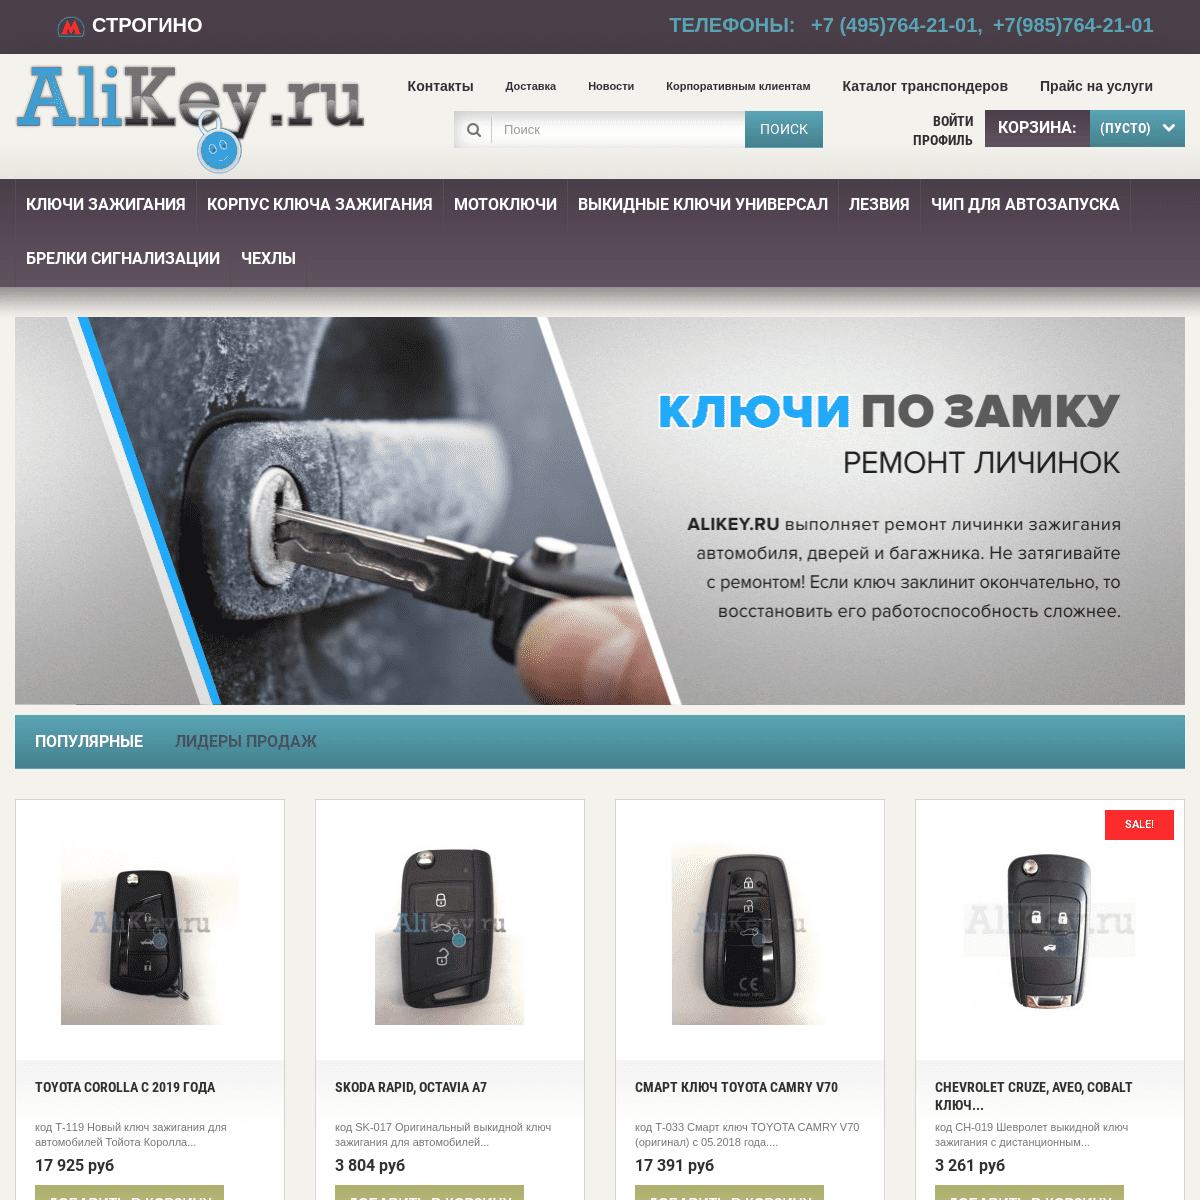 A complete backup of alikey.ru